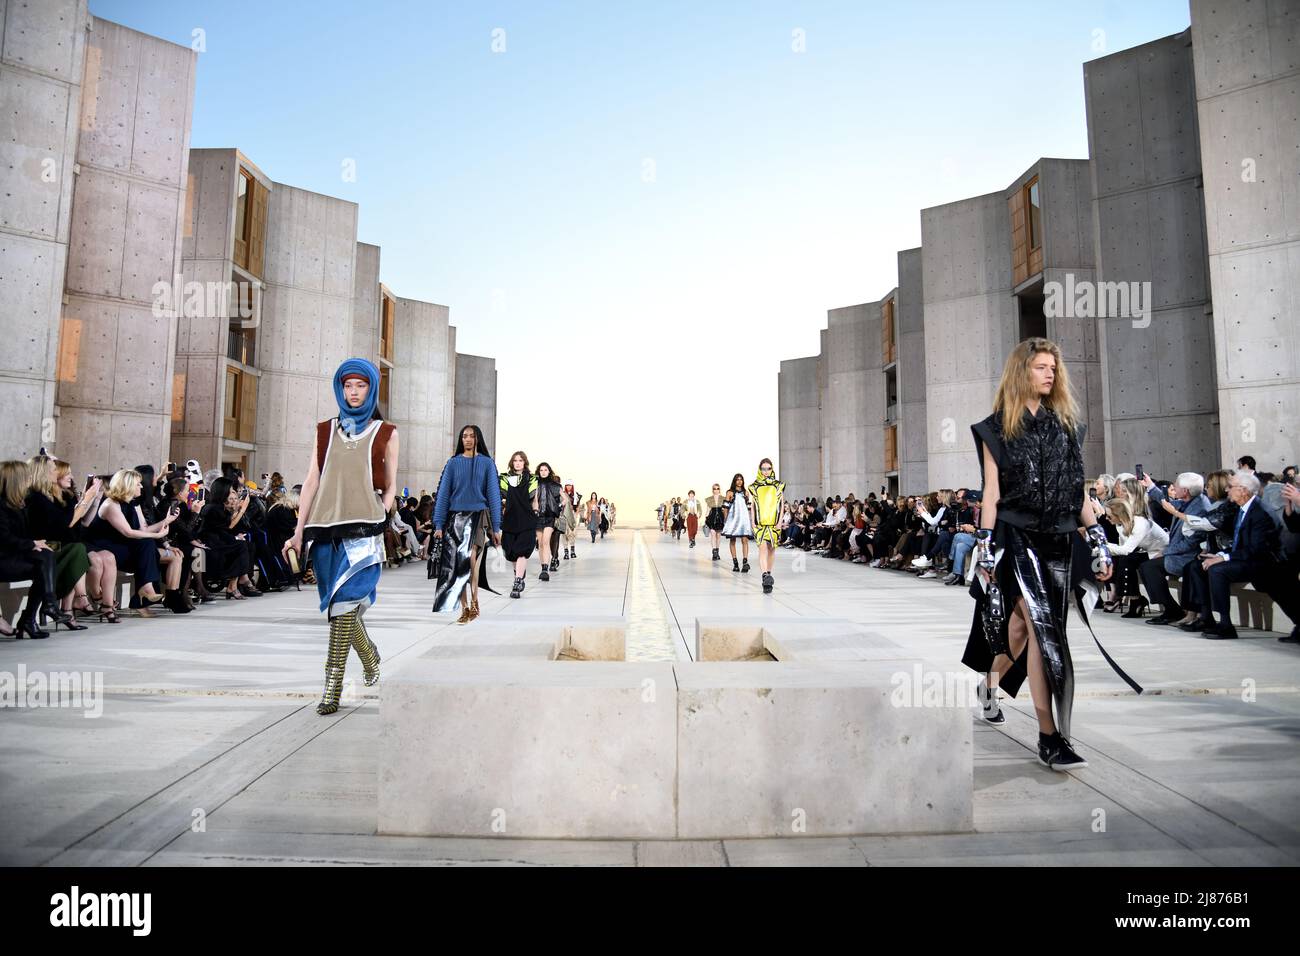 Louis Vuitton Archives - University of Fashion Blog